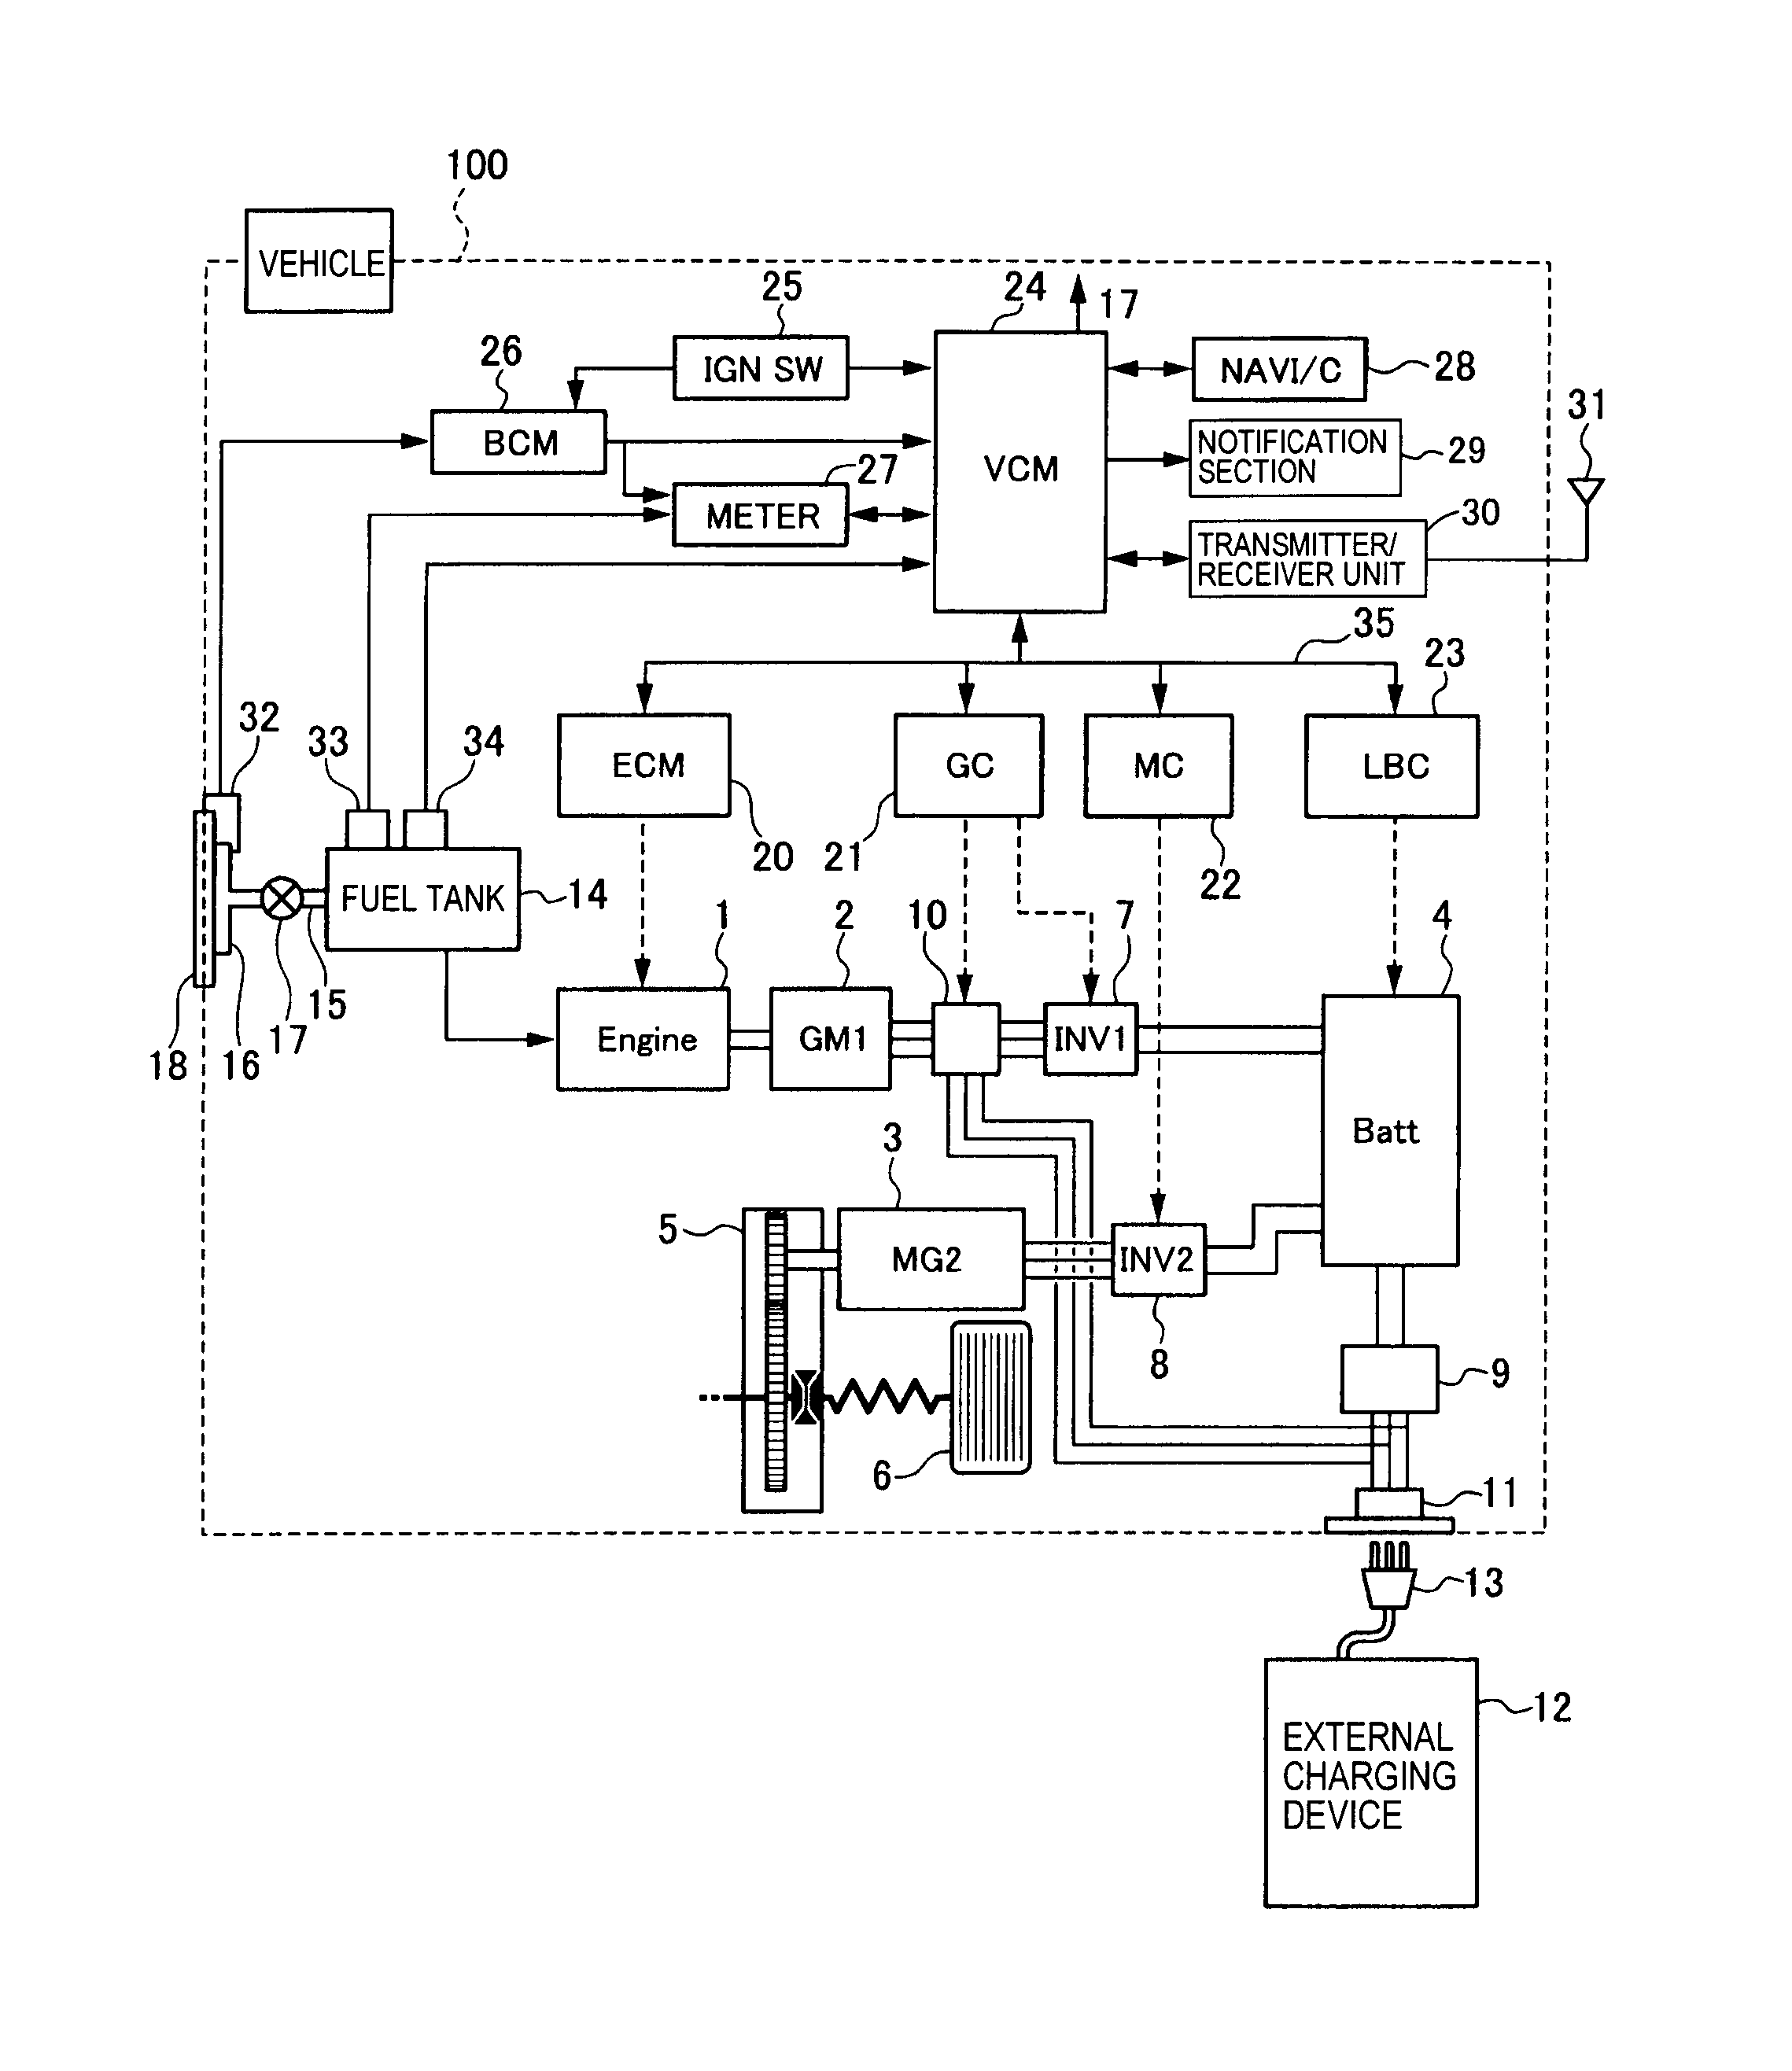 aquacal heatwave wiring diagram